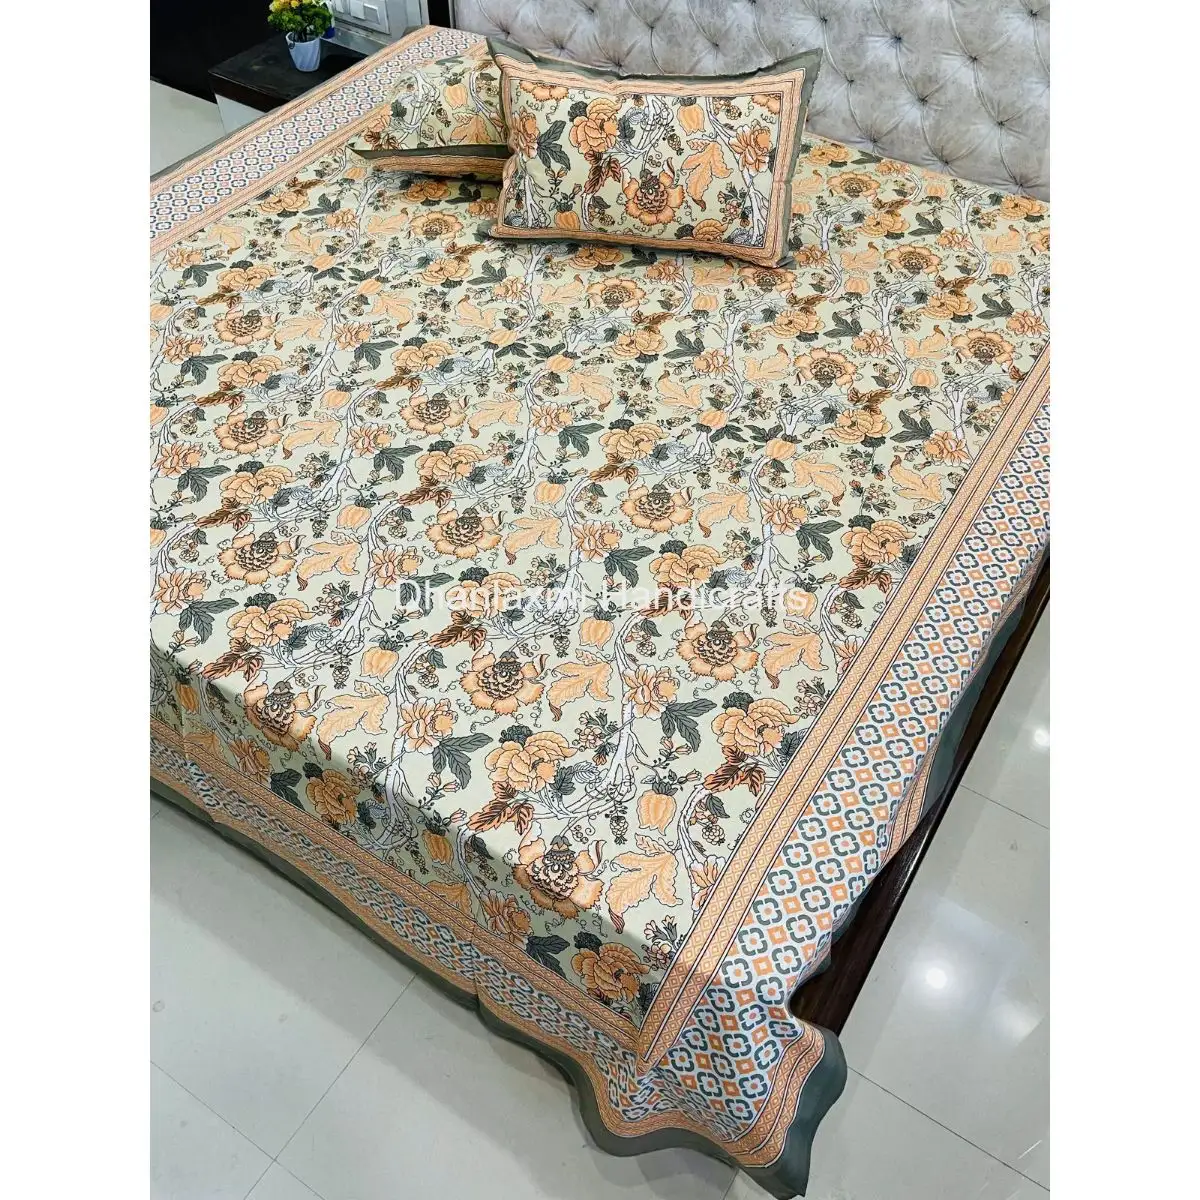 Jaipuriデザイン手作り寝具ベッドシーツコットンベッドサイズハンドブロックプリントベッドカバーセット卸売インドのベッドシーツ